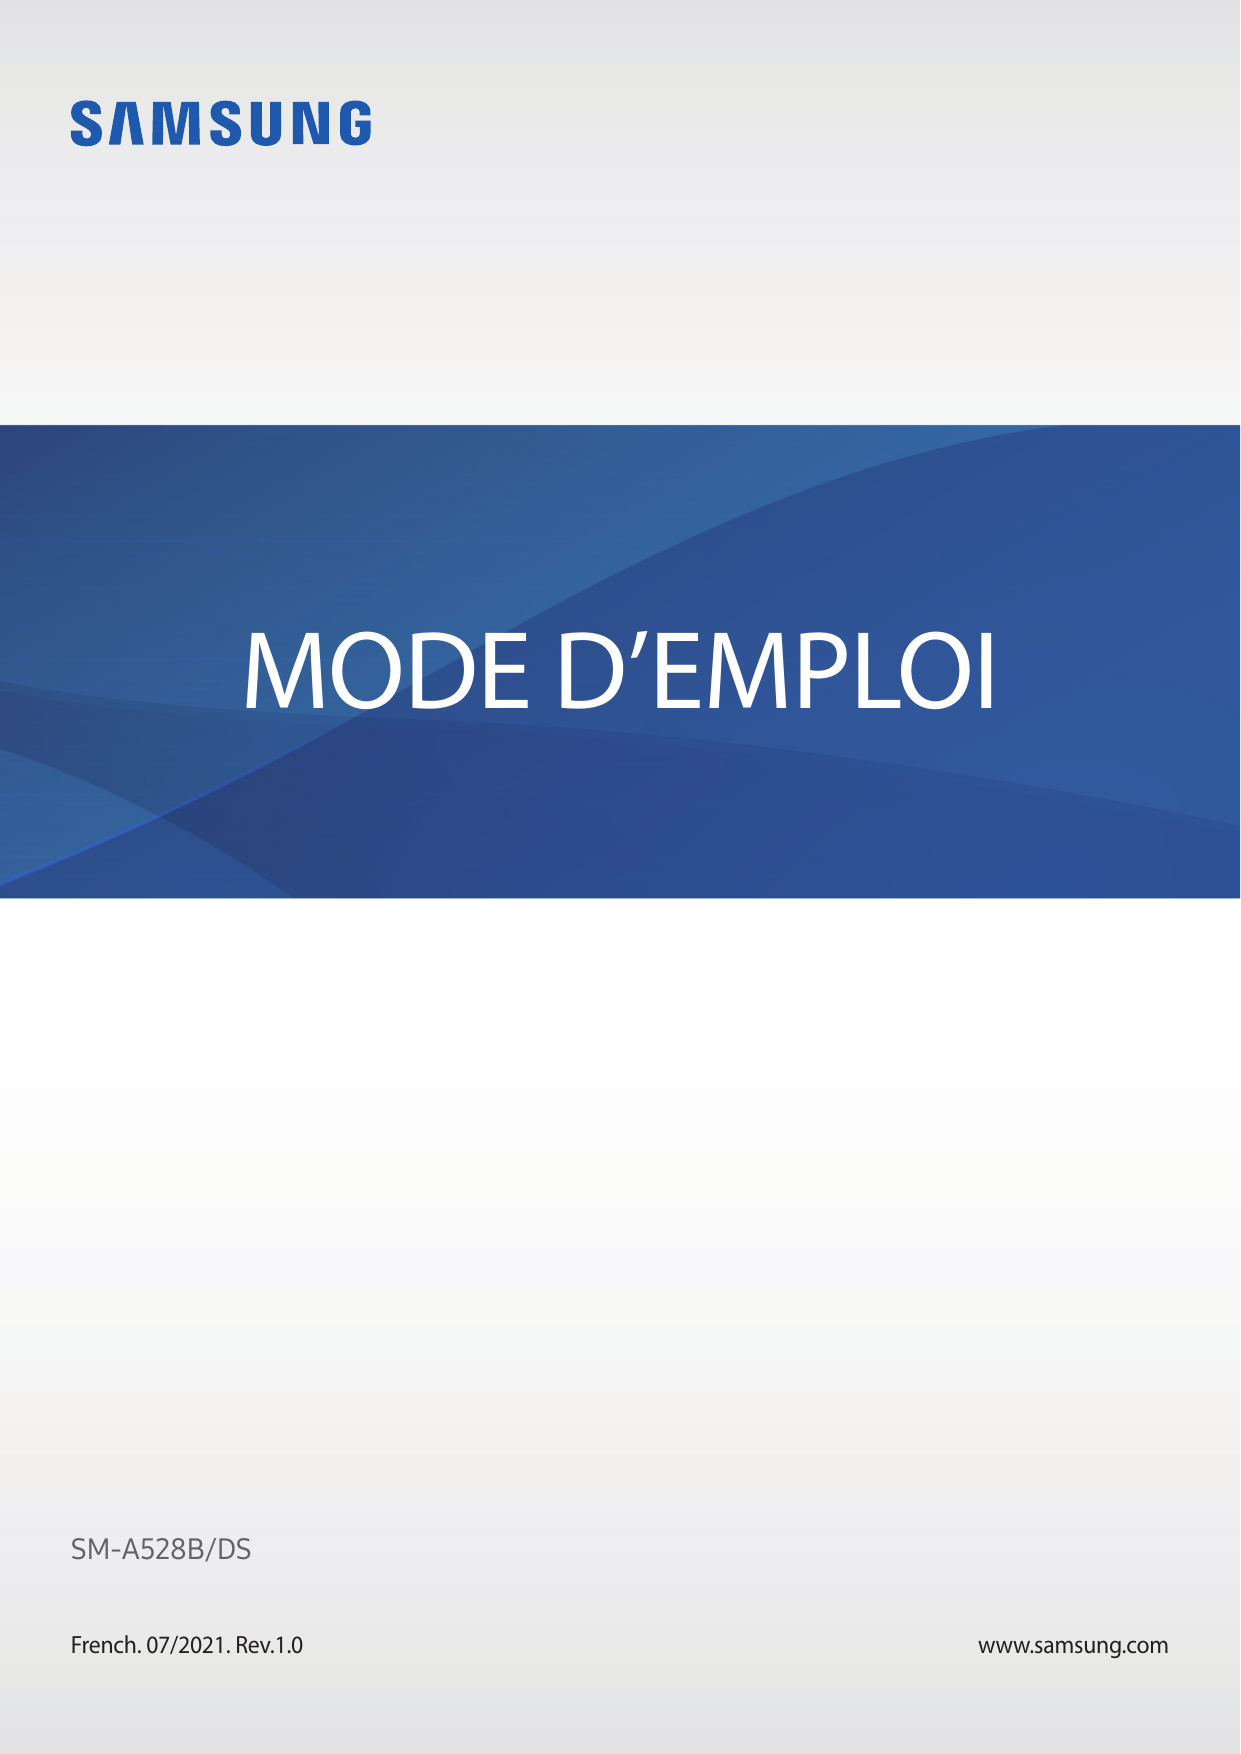 MODE D’EMPLOISM-A528B/DSFrench. 07/2021. Rev.1.0www.samsung.com